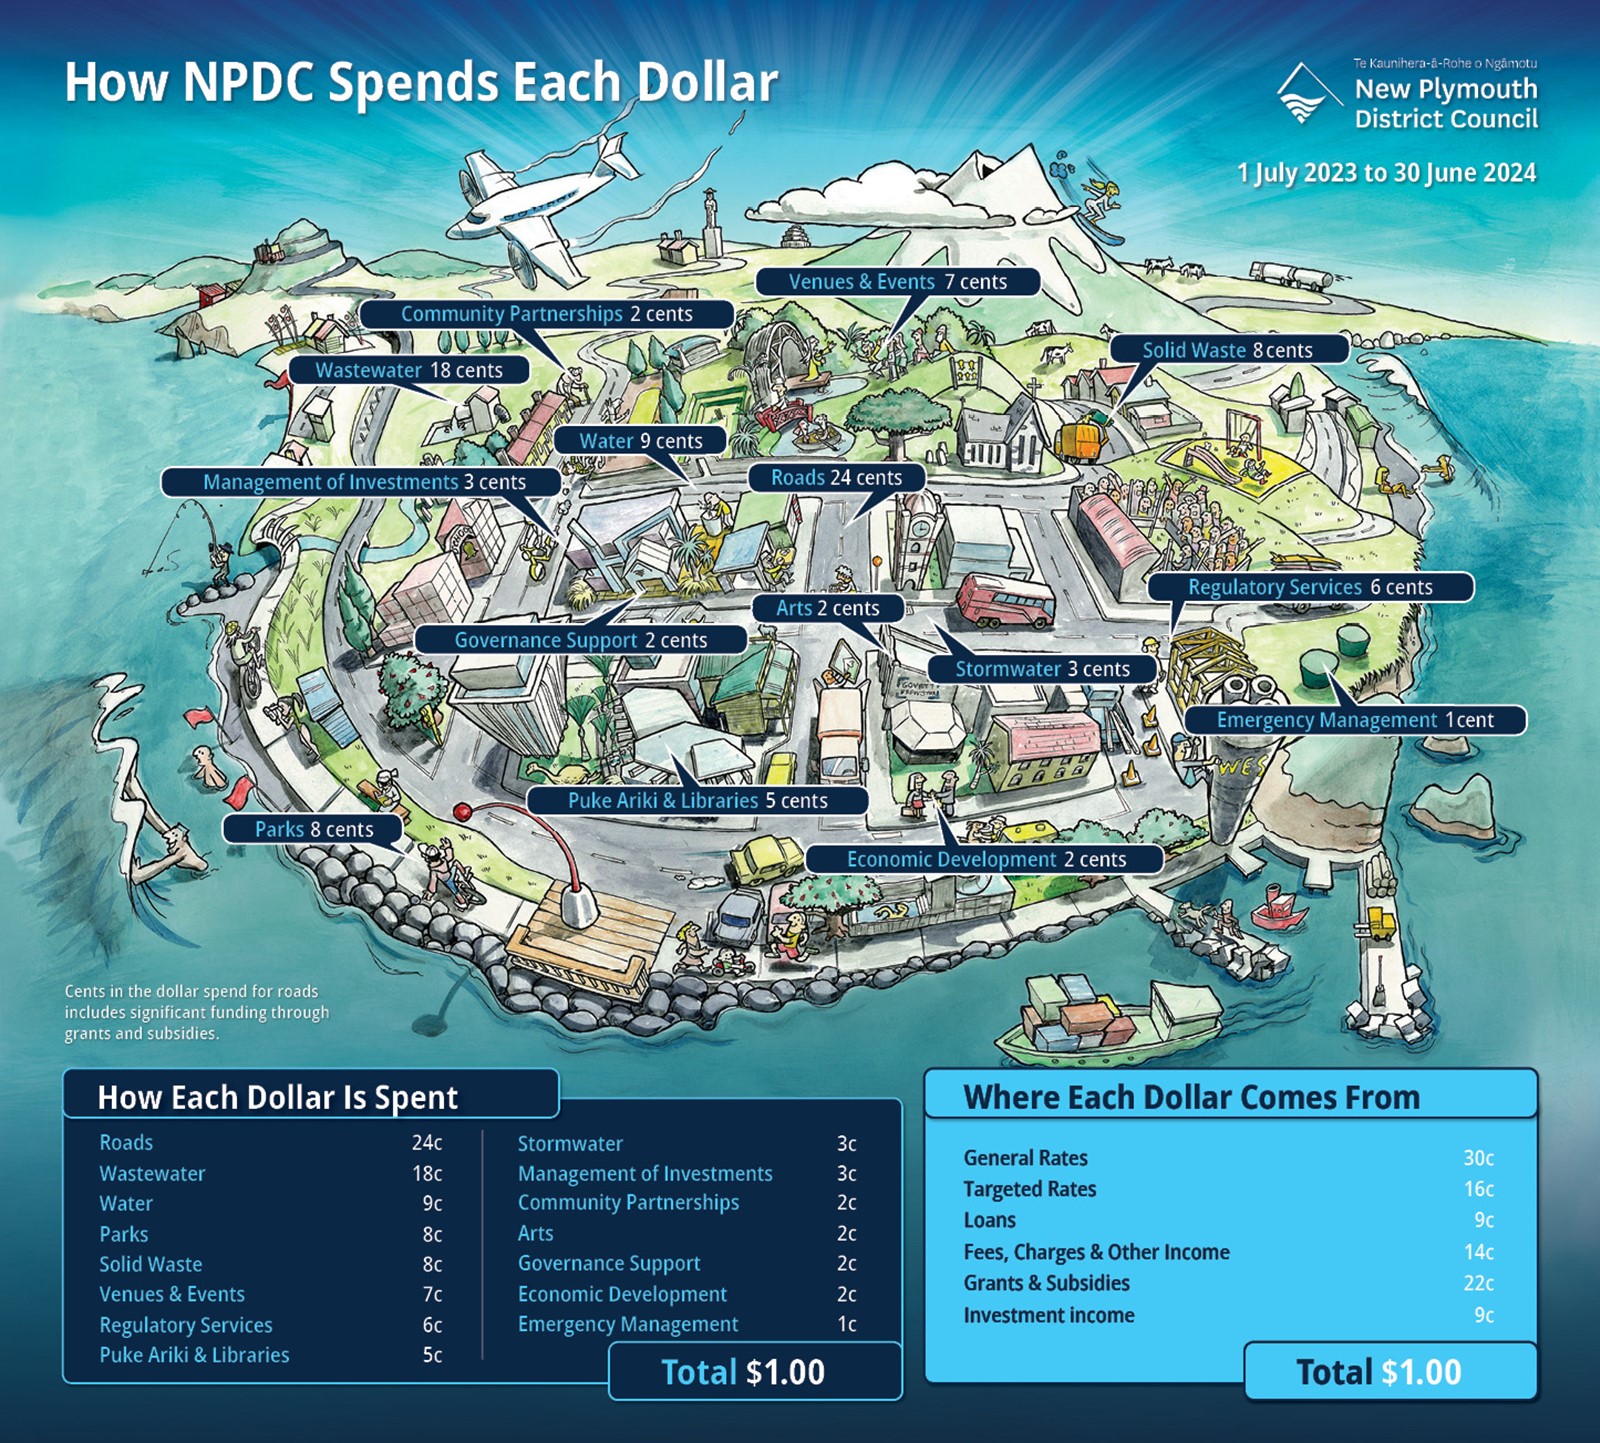 How NPDC Spends Each Dollar